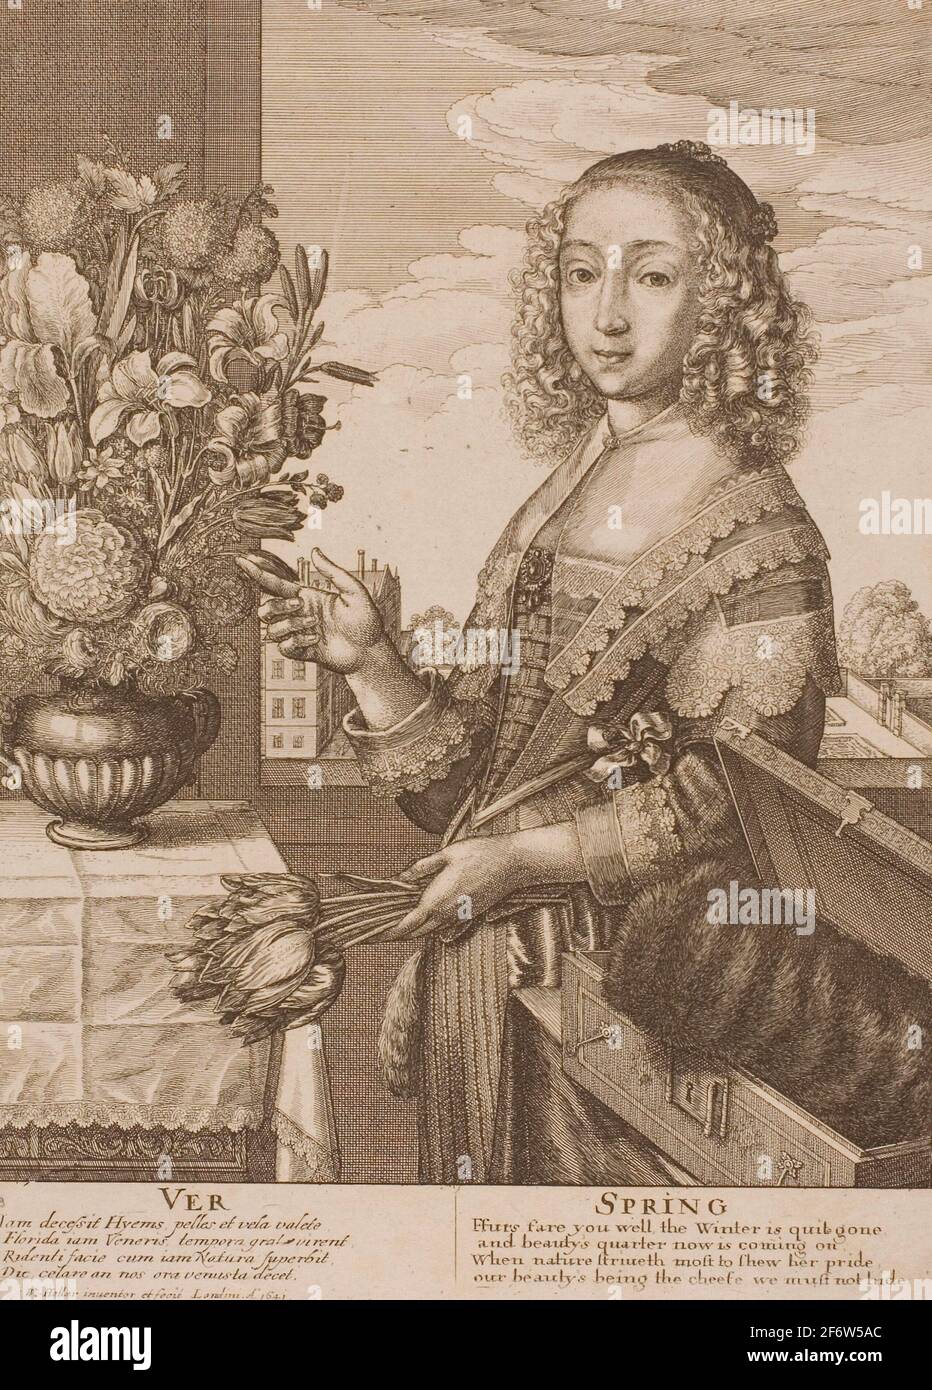 Author: Wenceslaus Hollar. Spring - 1641 - Wenceslaus Hollar Czech, 1607-1677. Etching on ivory laid paper. Bohemia. Stock Photo